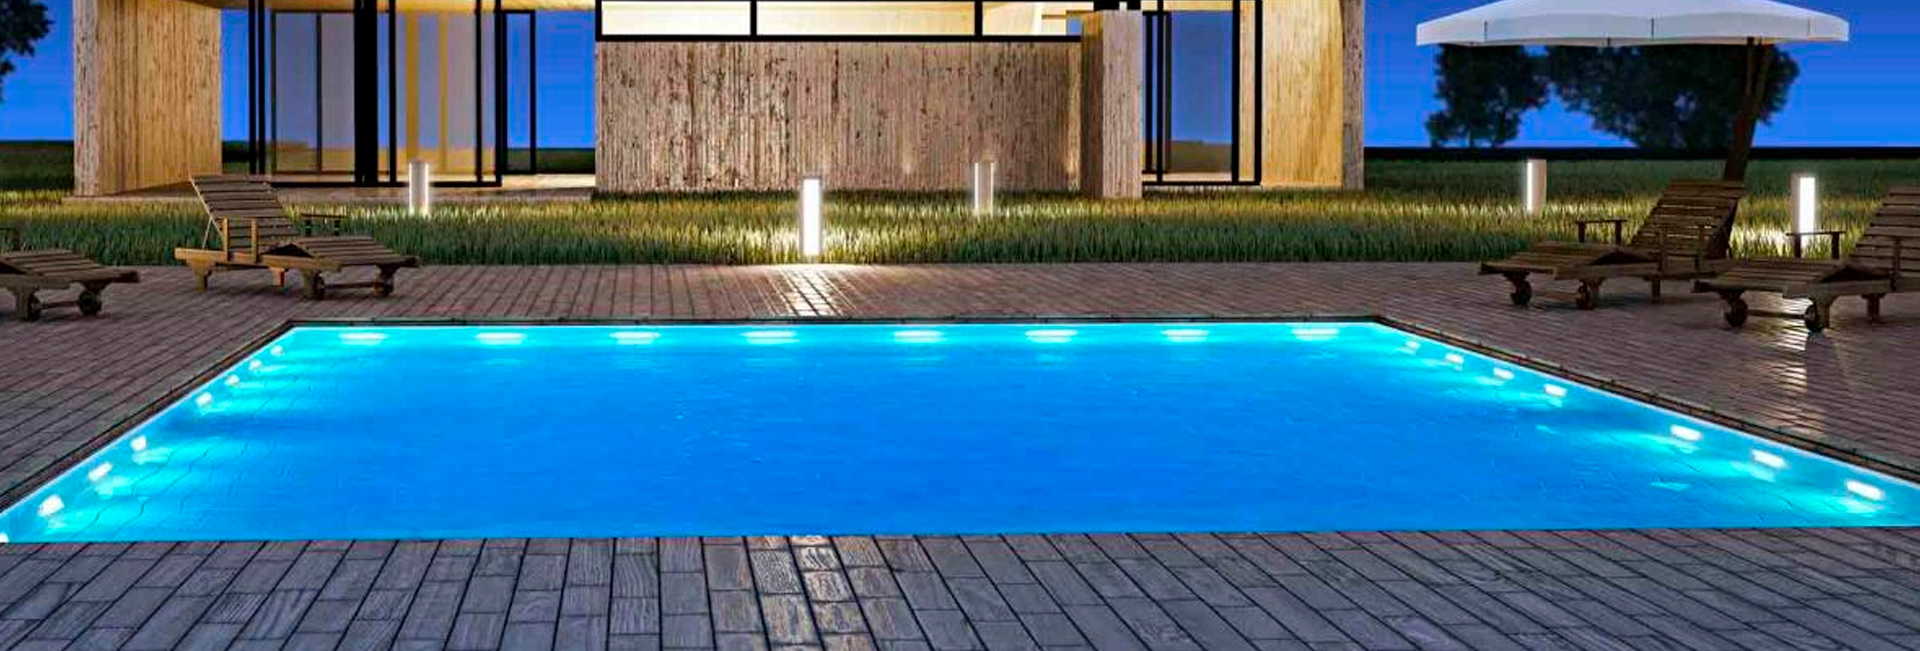 Elegir la piscina para tu hogar